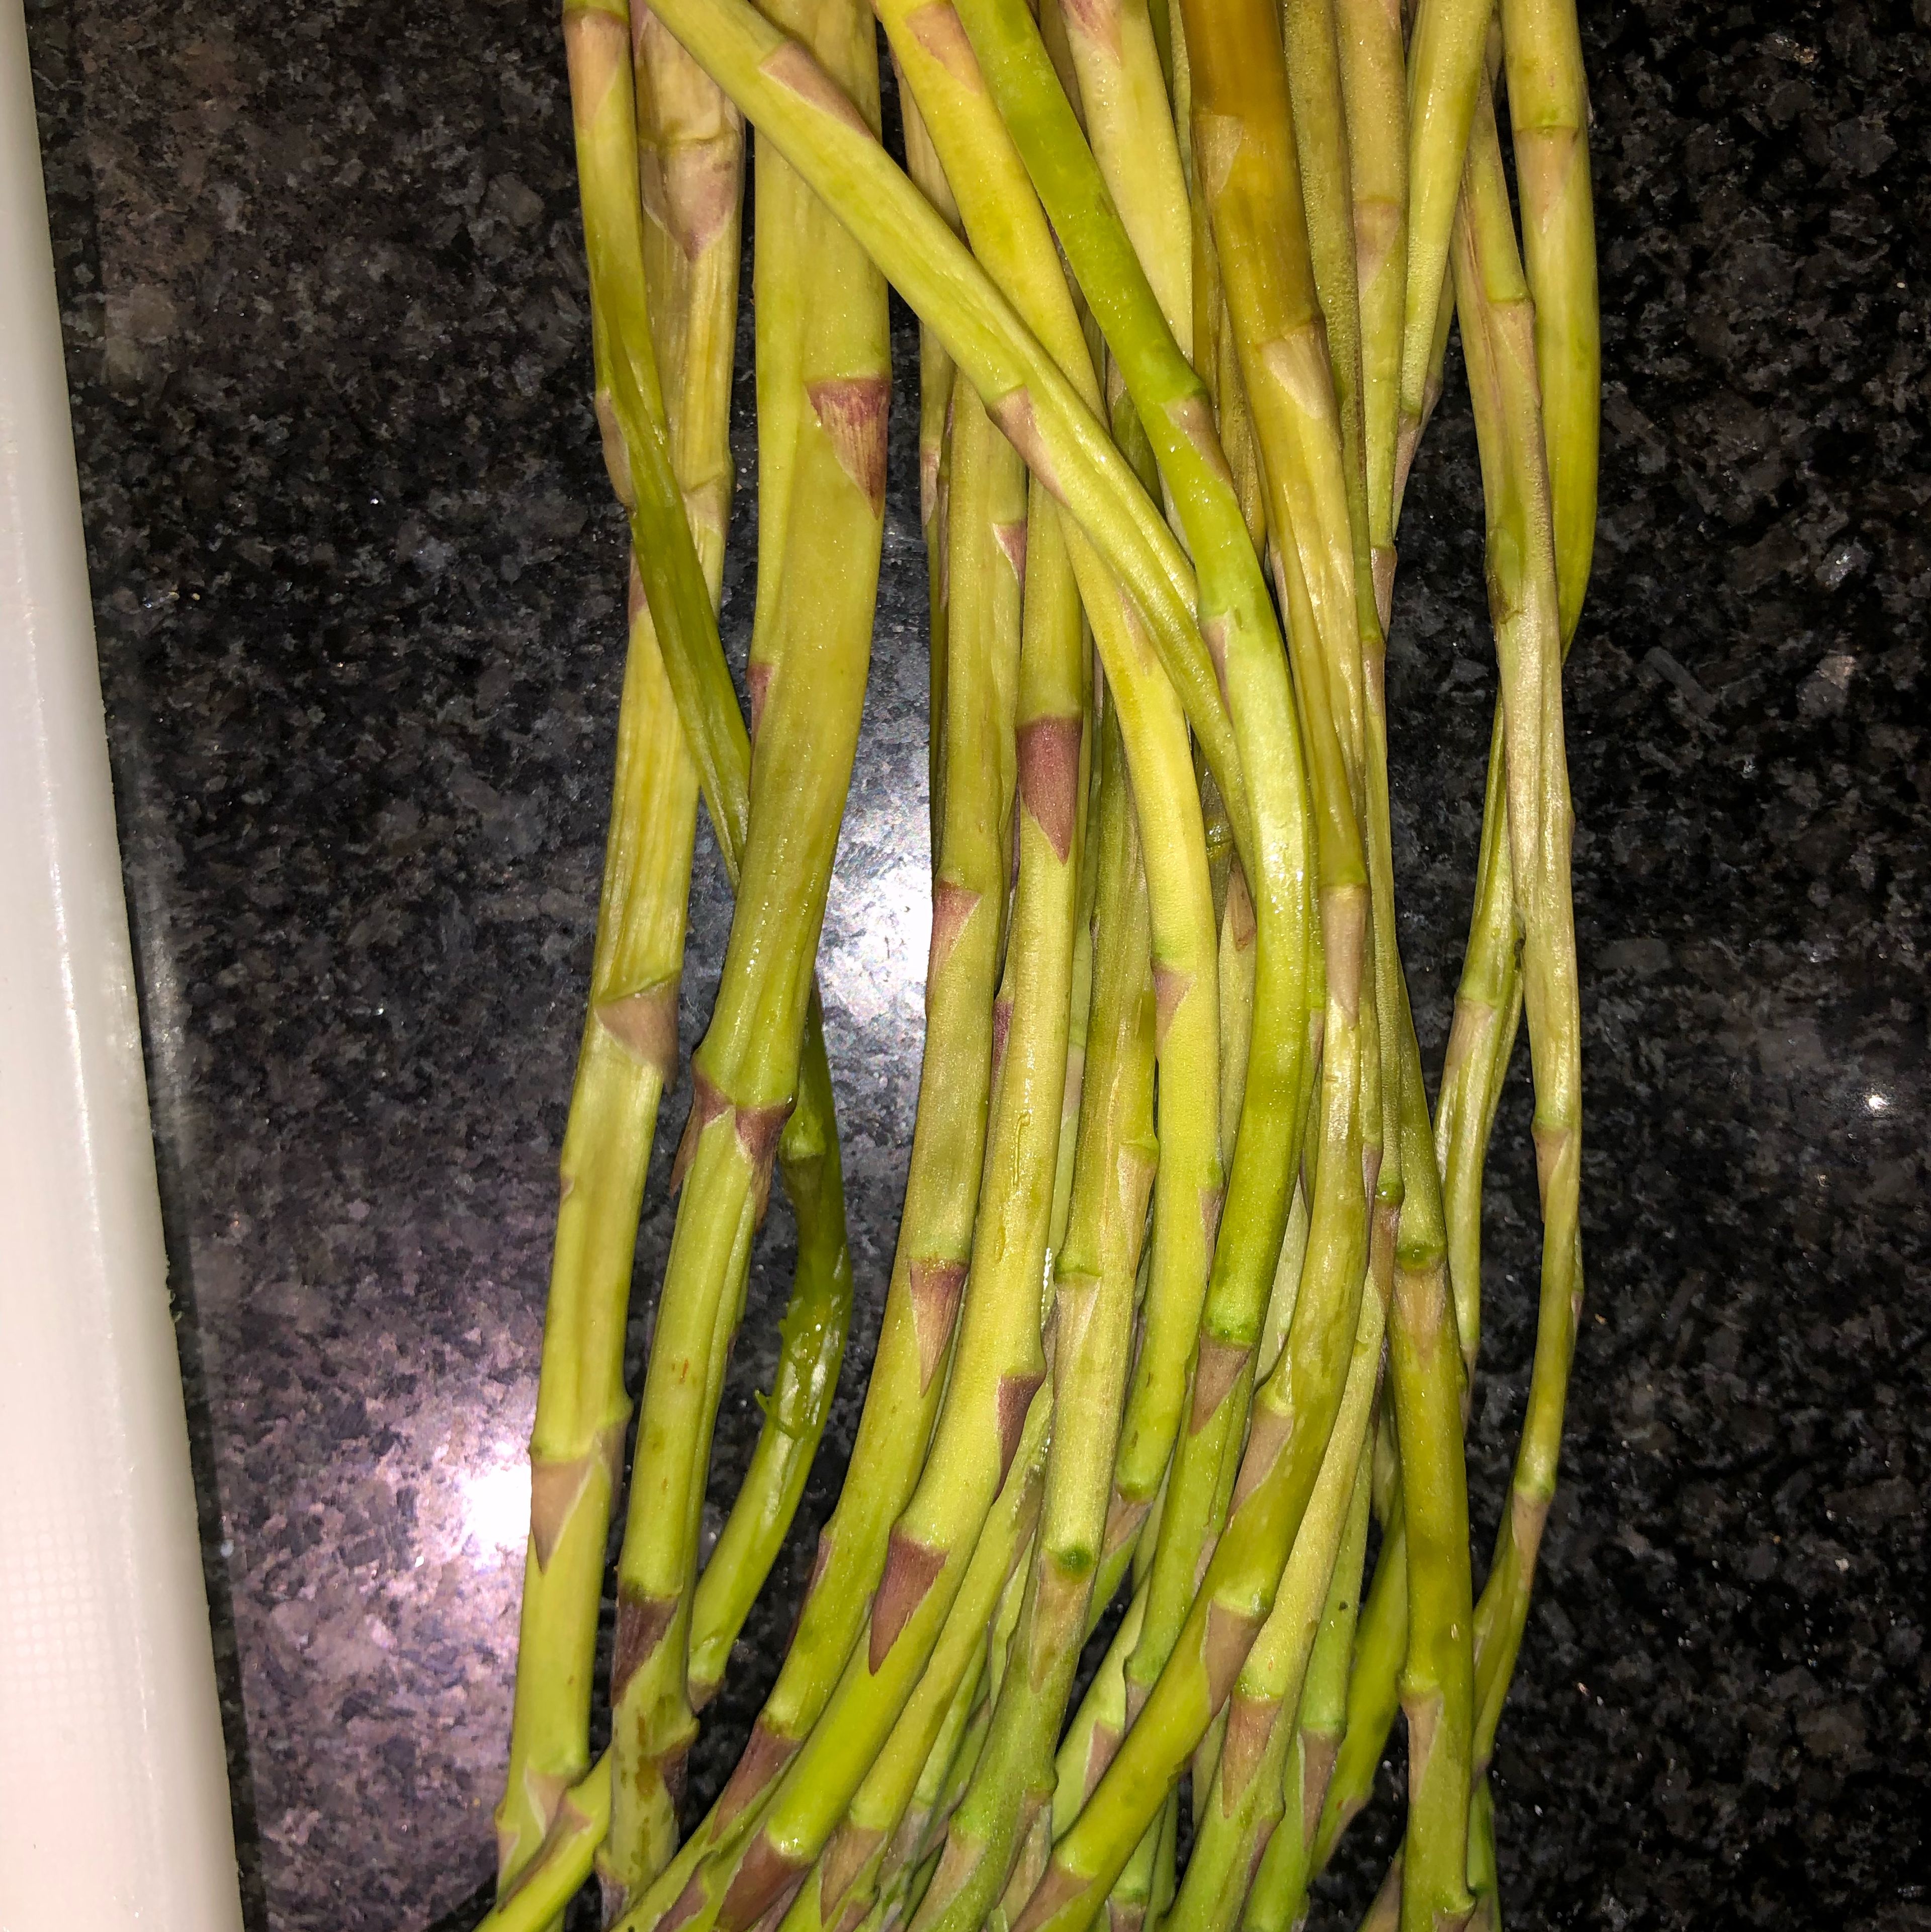 Chop the asparagus.